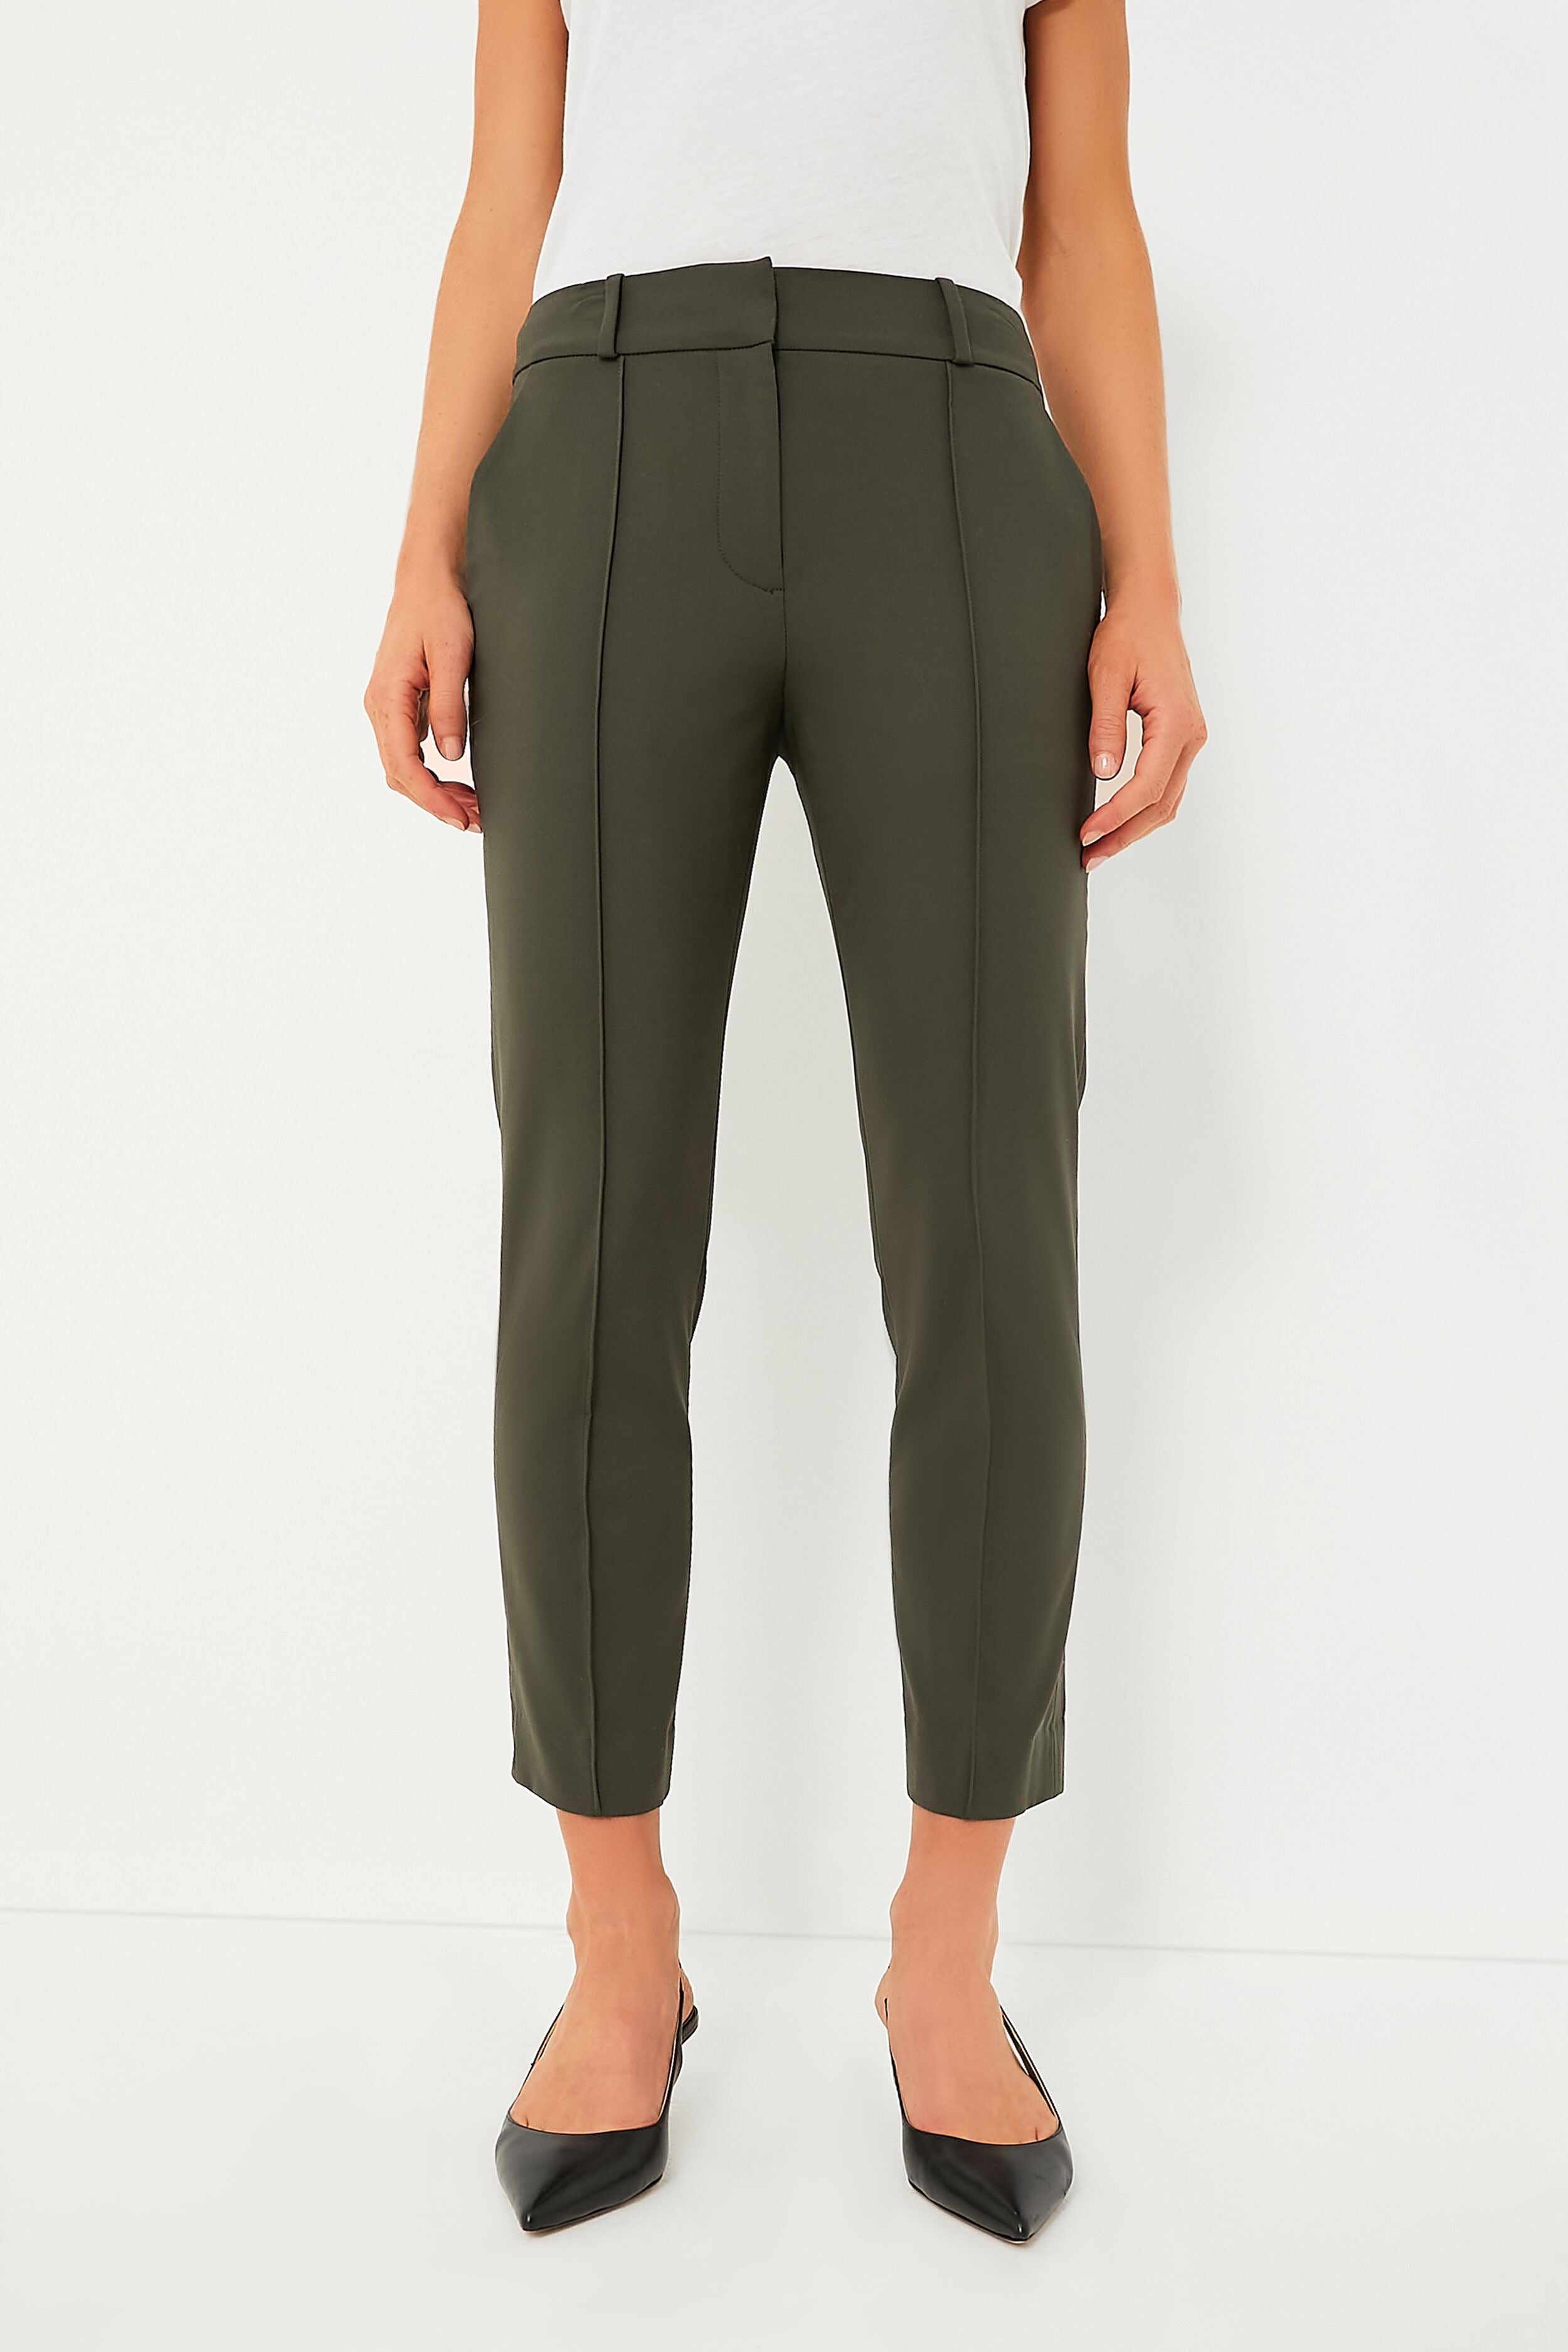 Veronica Beard Solid Green Dress Pants Size 12 - 79% off